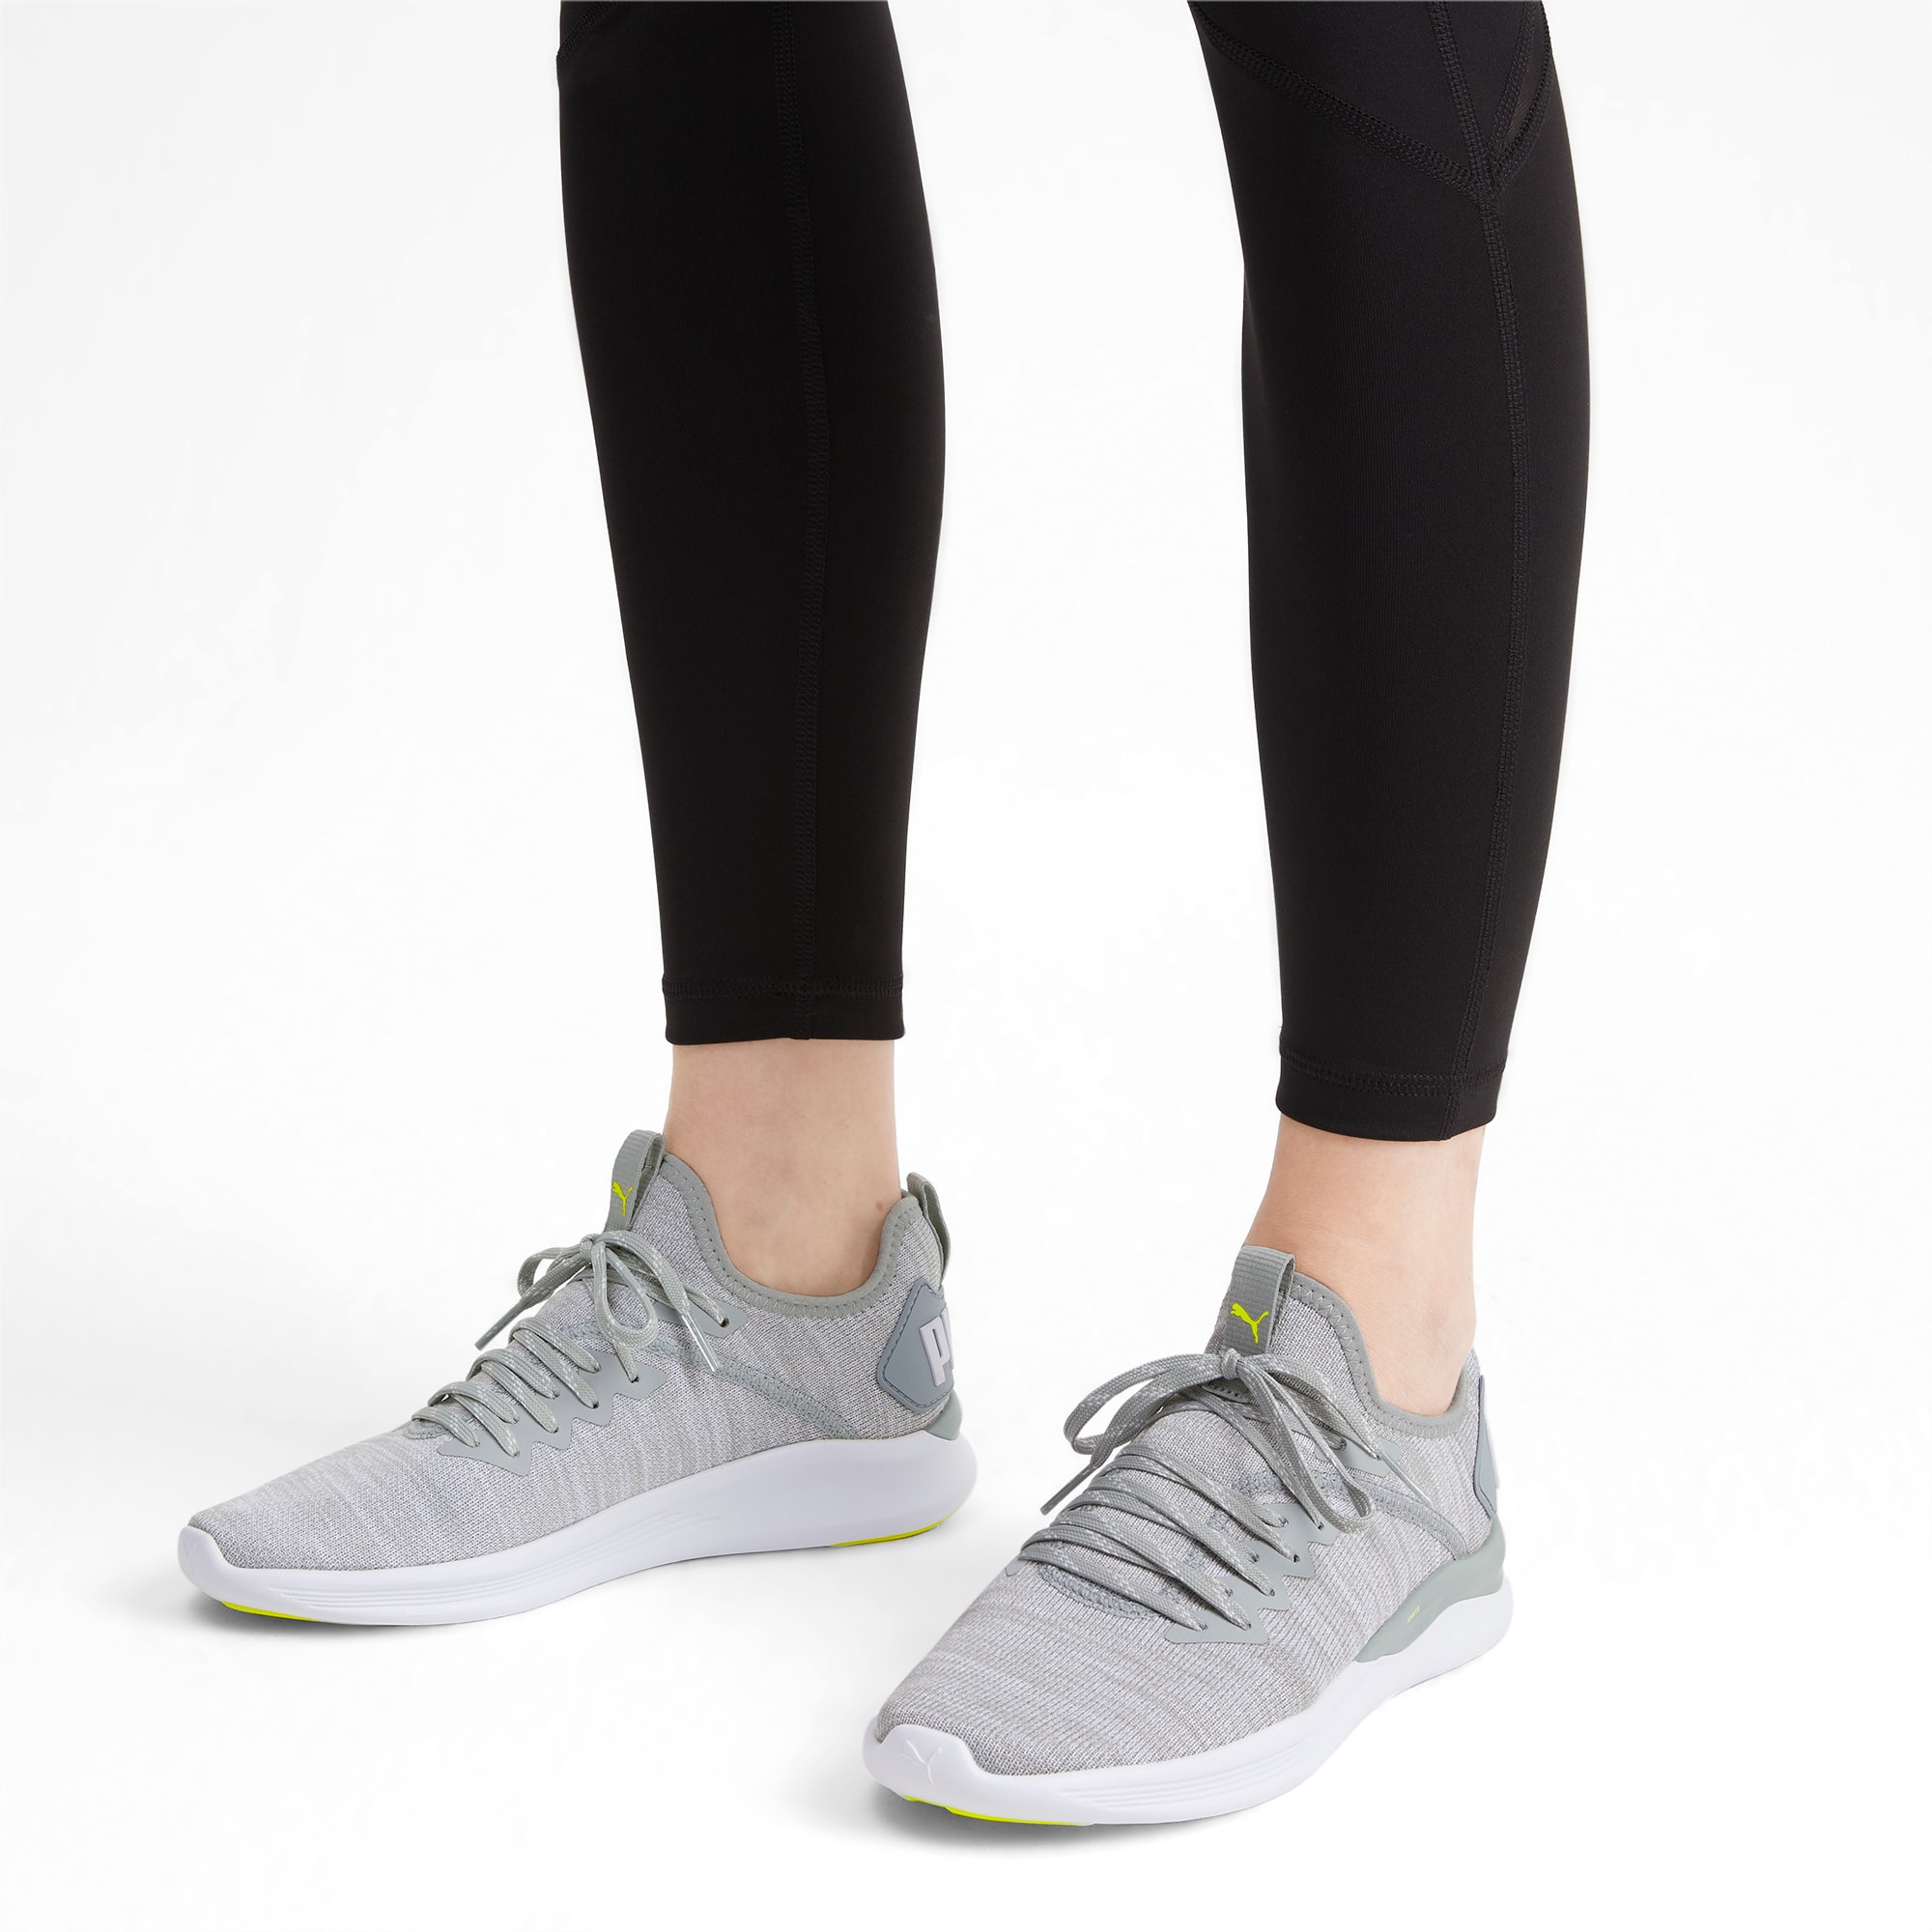 ignite flash evoknit women's running shoes